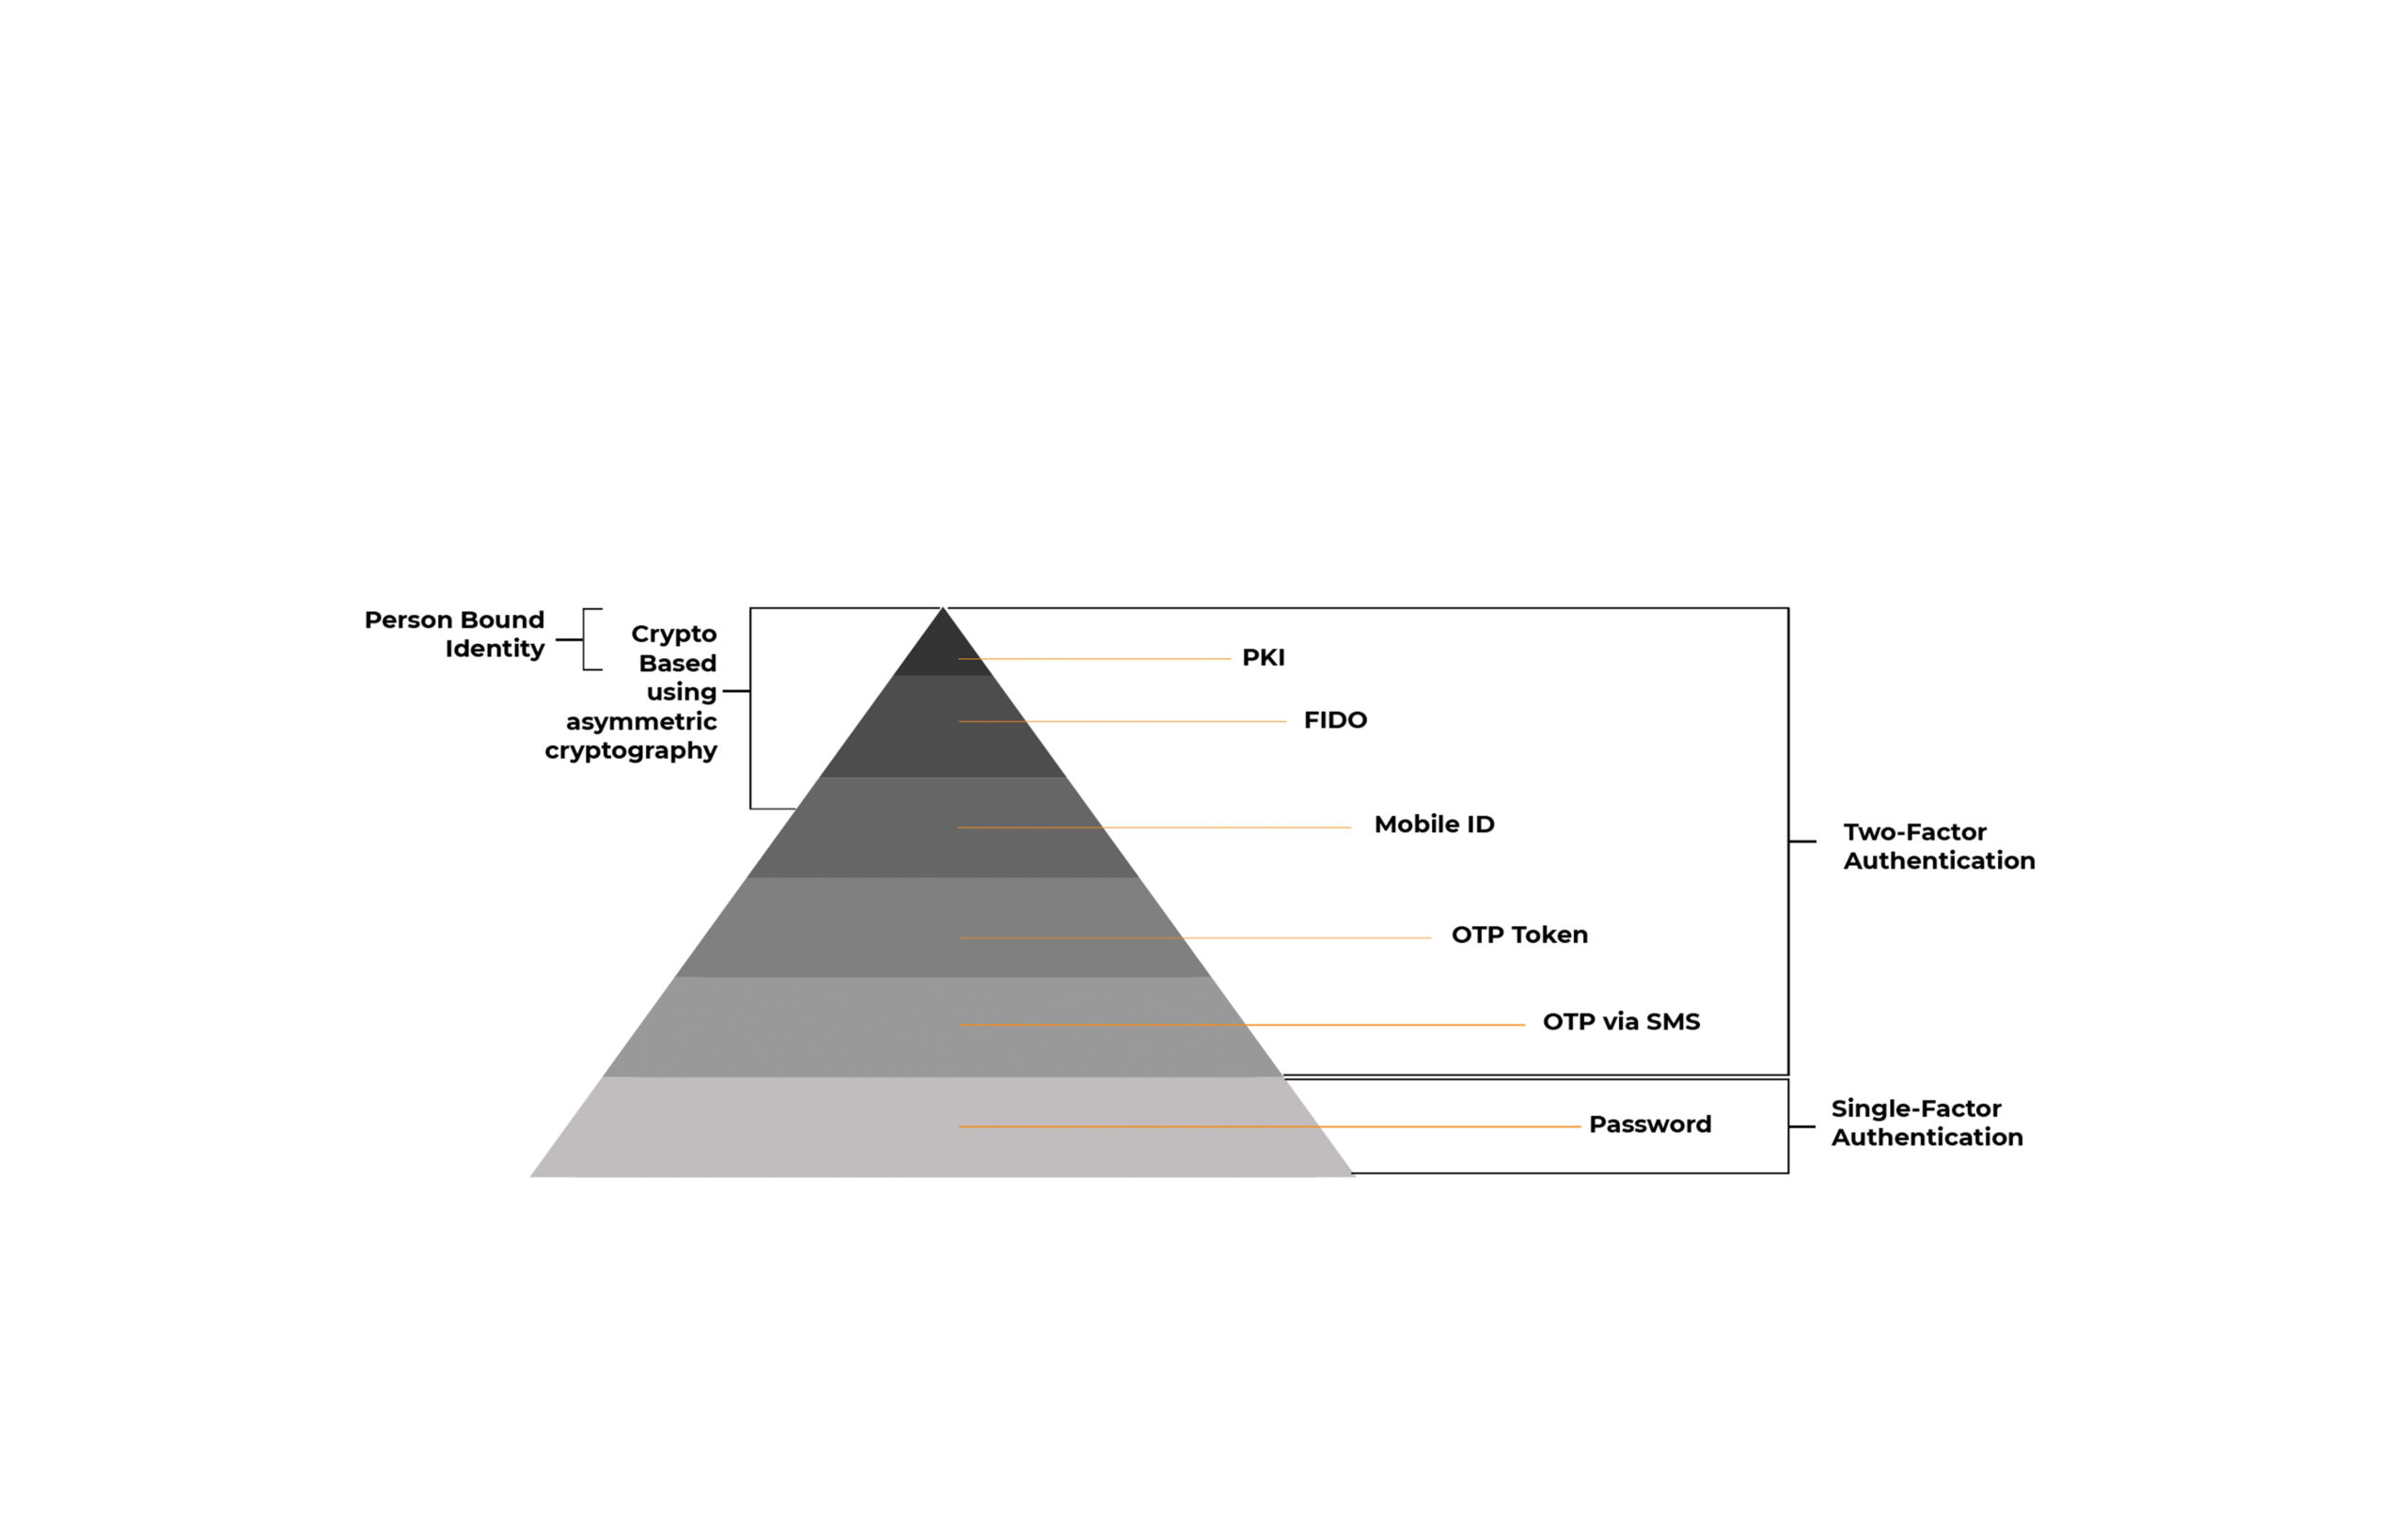 Authentication Pyramid